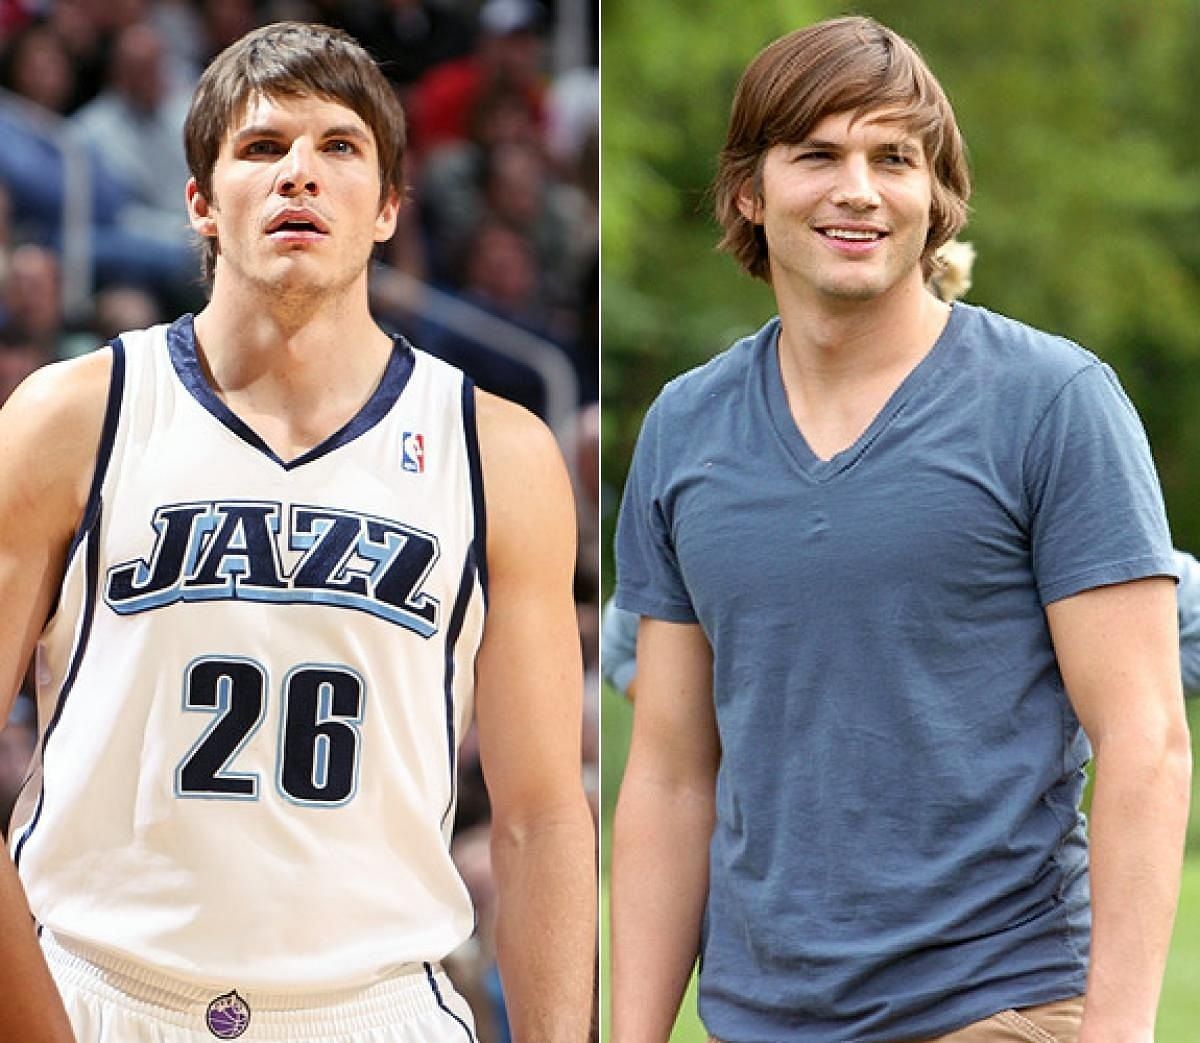 Kyle Korver is a lookalike of actor Ashton Kutcher. [photo: Fans Share]